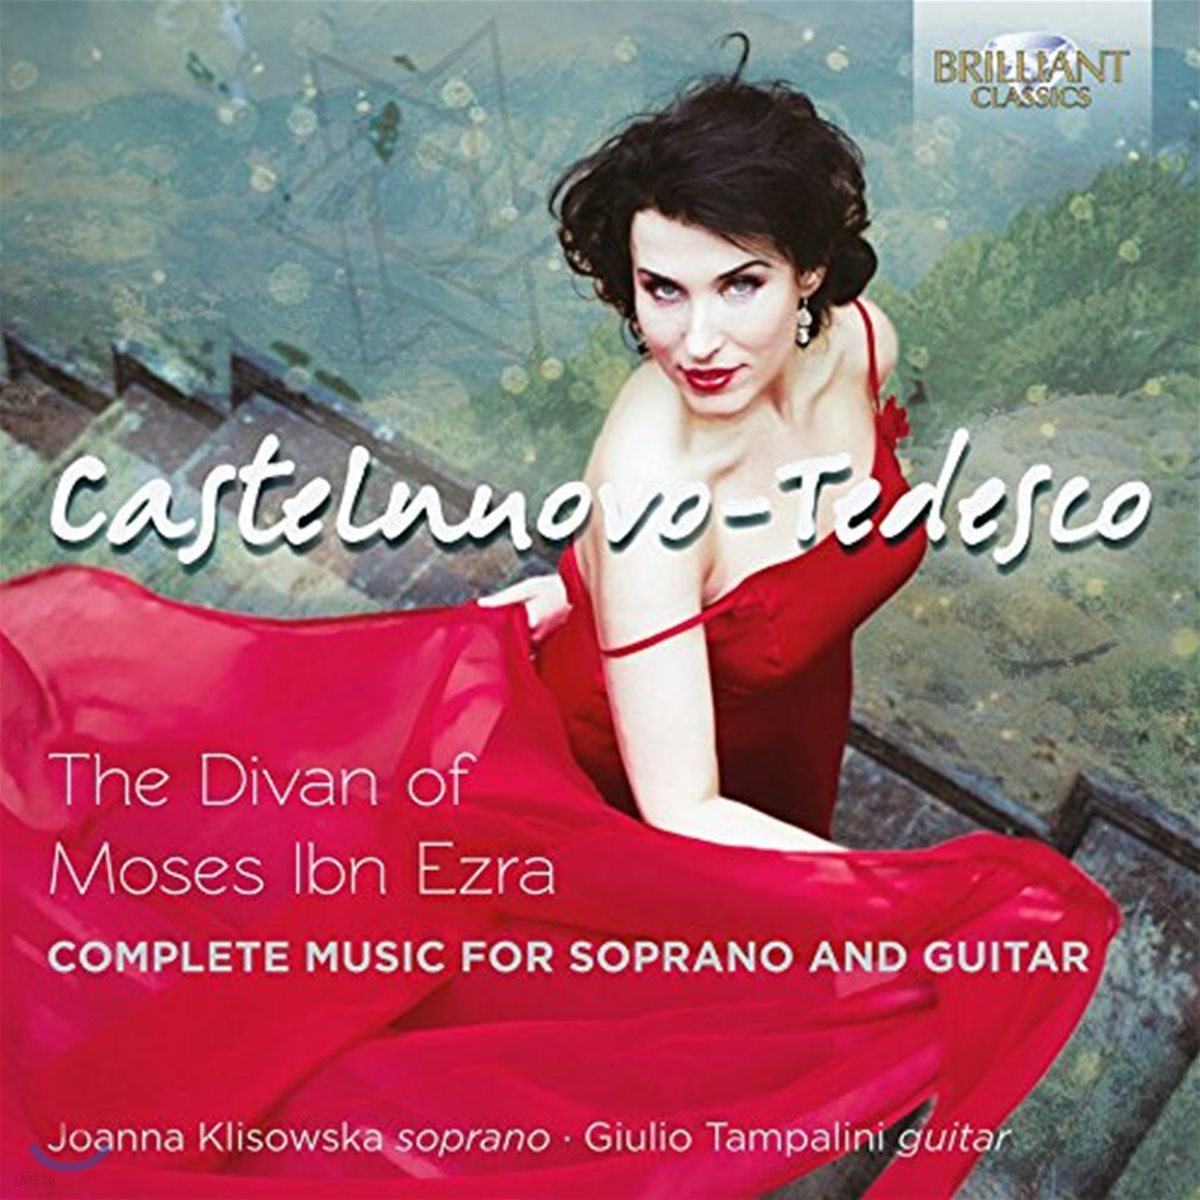 Joanna Klisowska 카스텔누오보-테데스코: 소프라노와 기타를 위한 음악 전곡 - 요안나 클리소브스카 (The Divan of Moses Ibn Ezra - Castelnuovo-Tedesco: Complete Music for Soprano and Guitar)